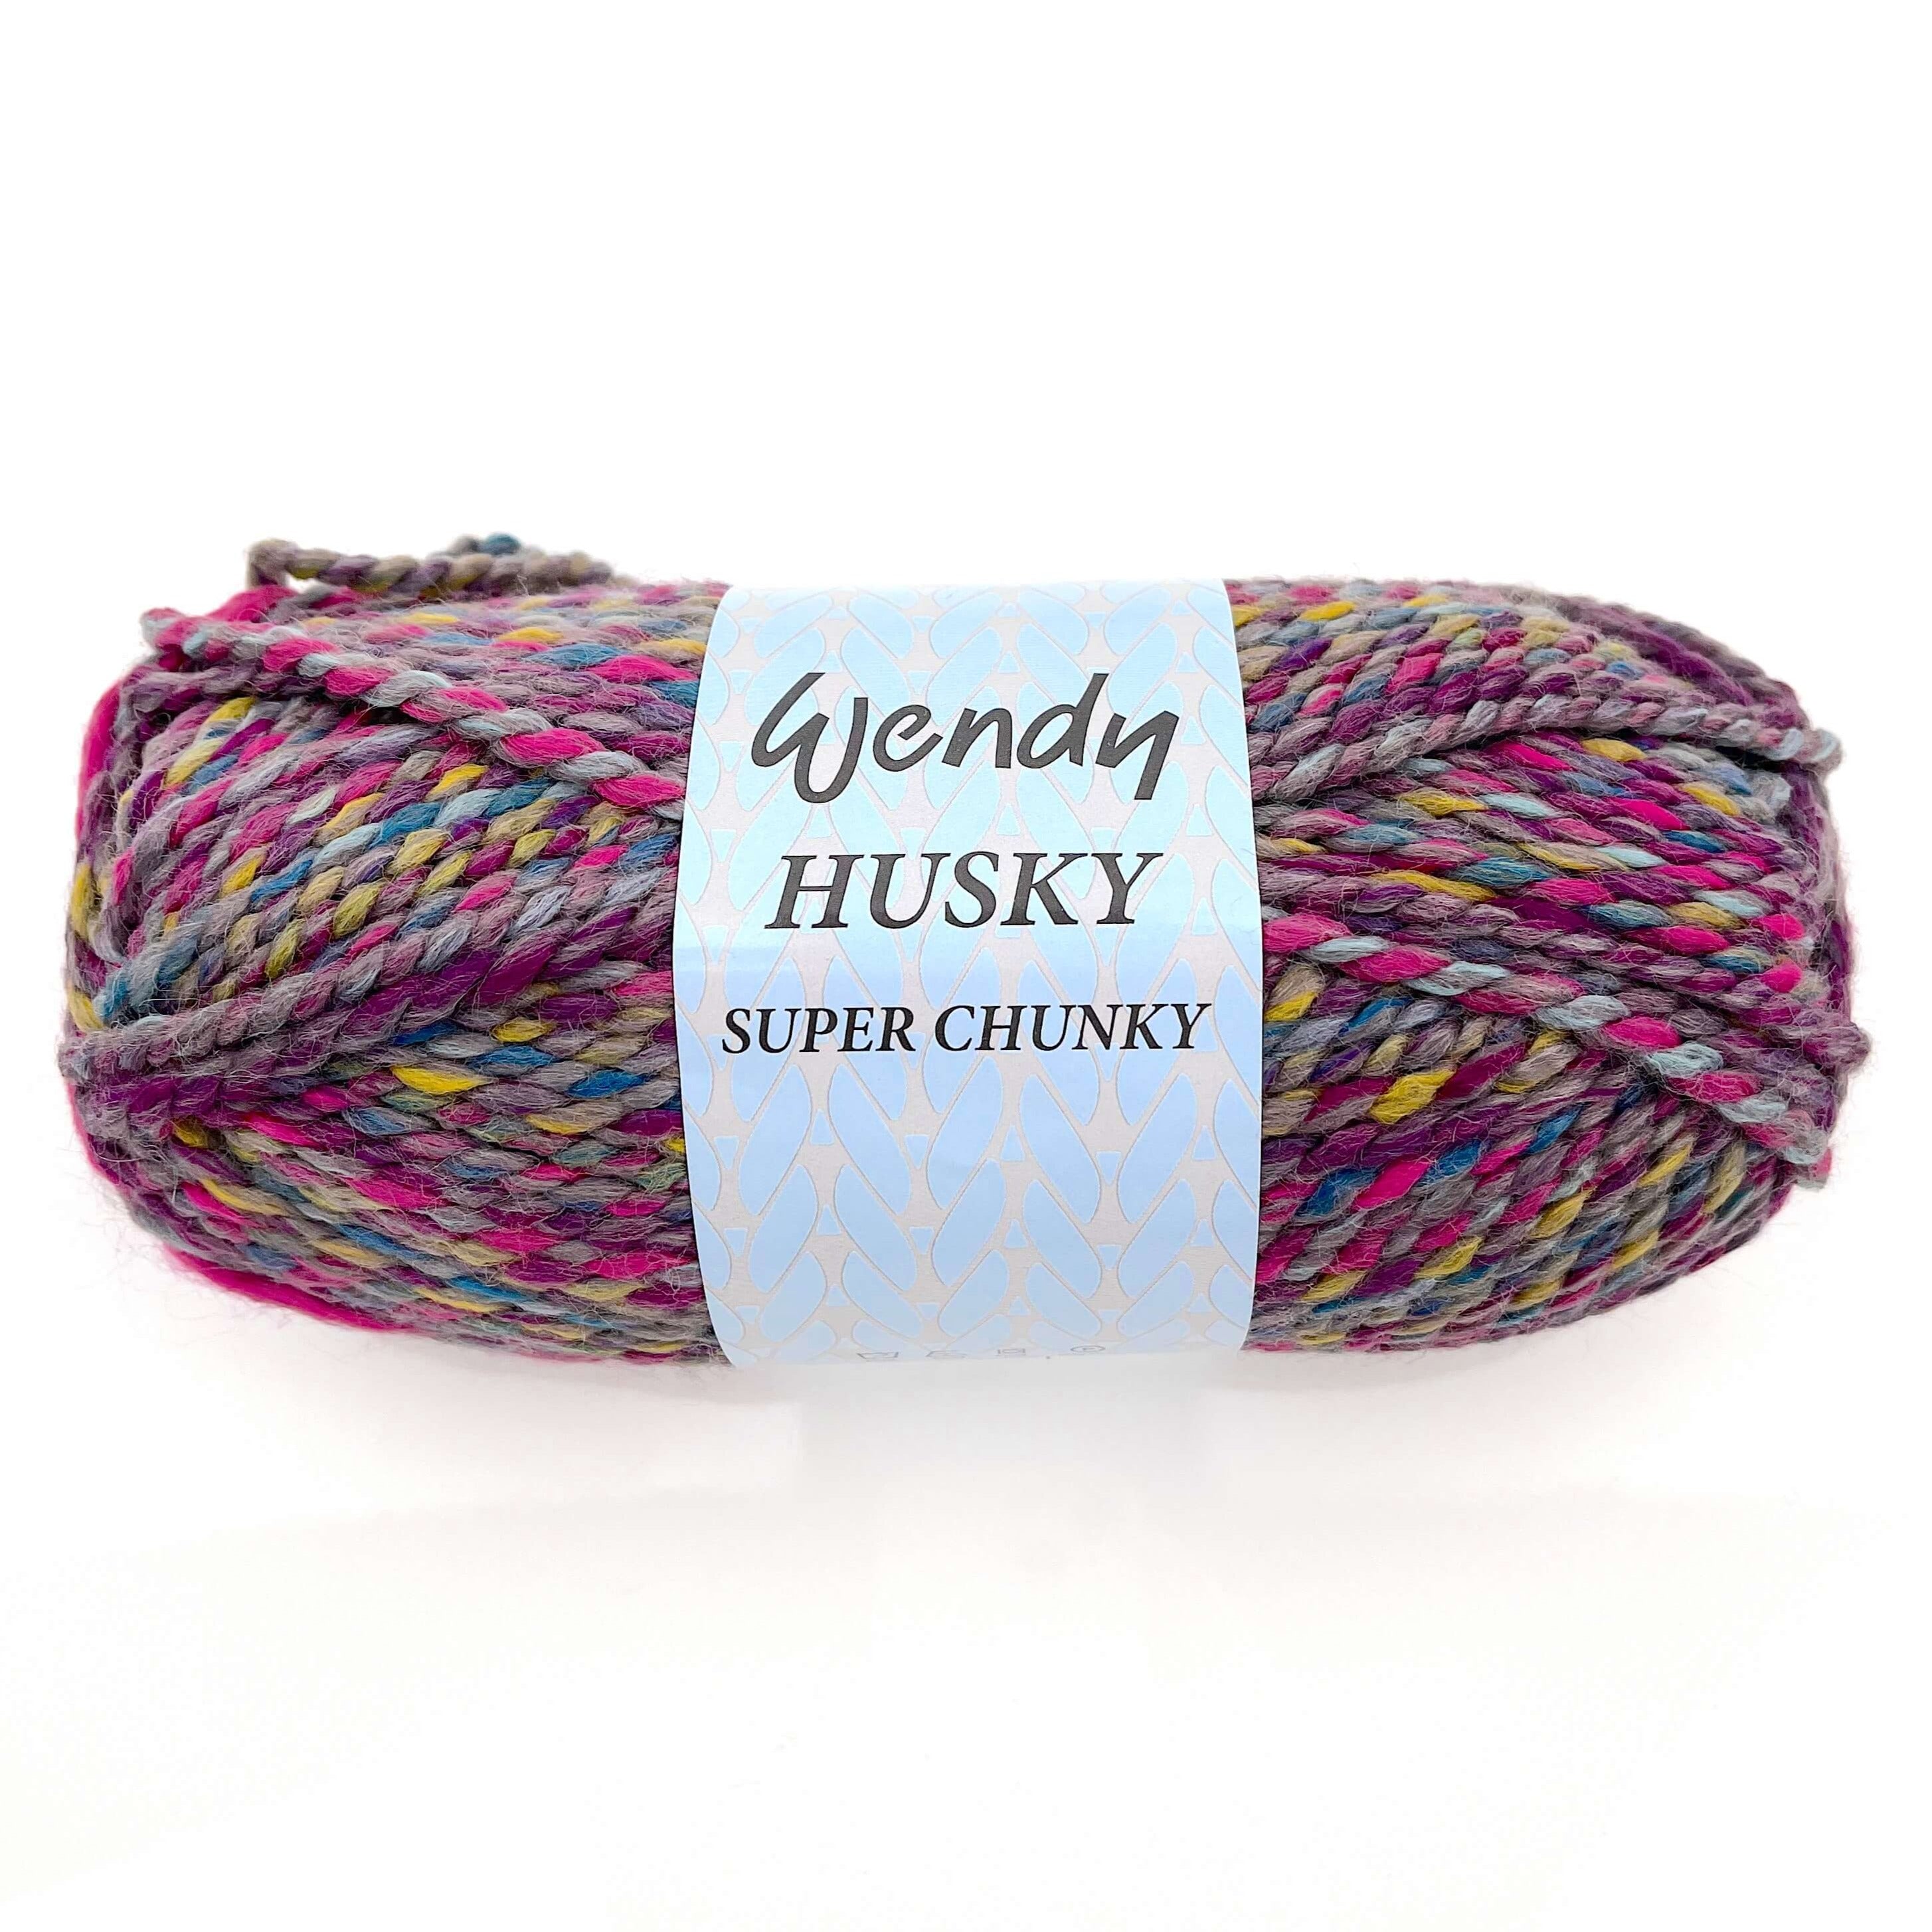 Wendy Wools Husky Super Chunky Acrylic Yarn 100g - 5684 Adventure